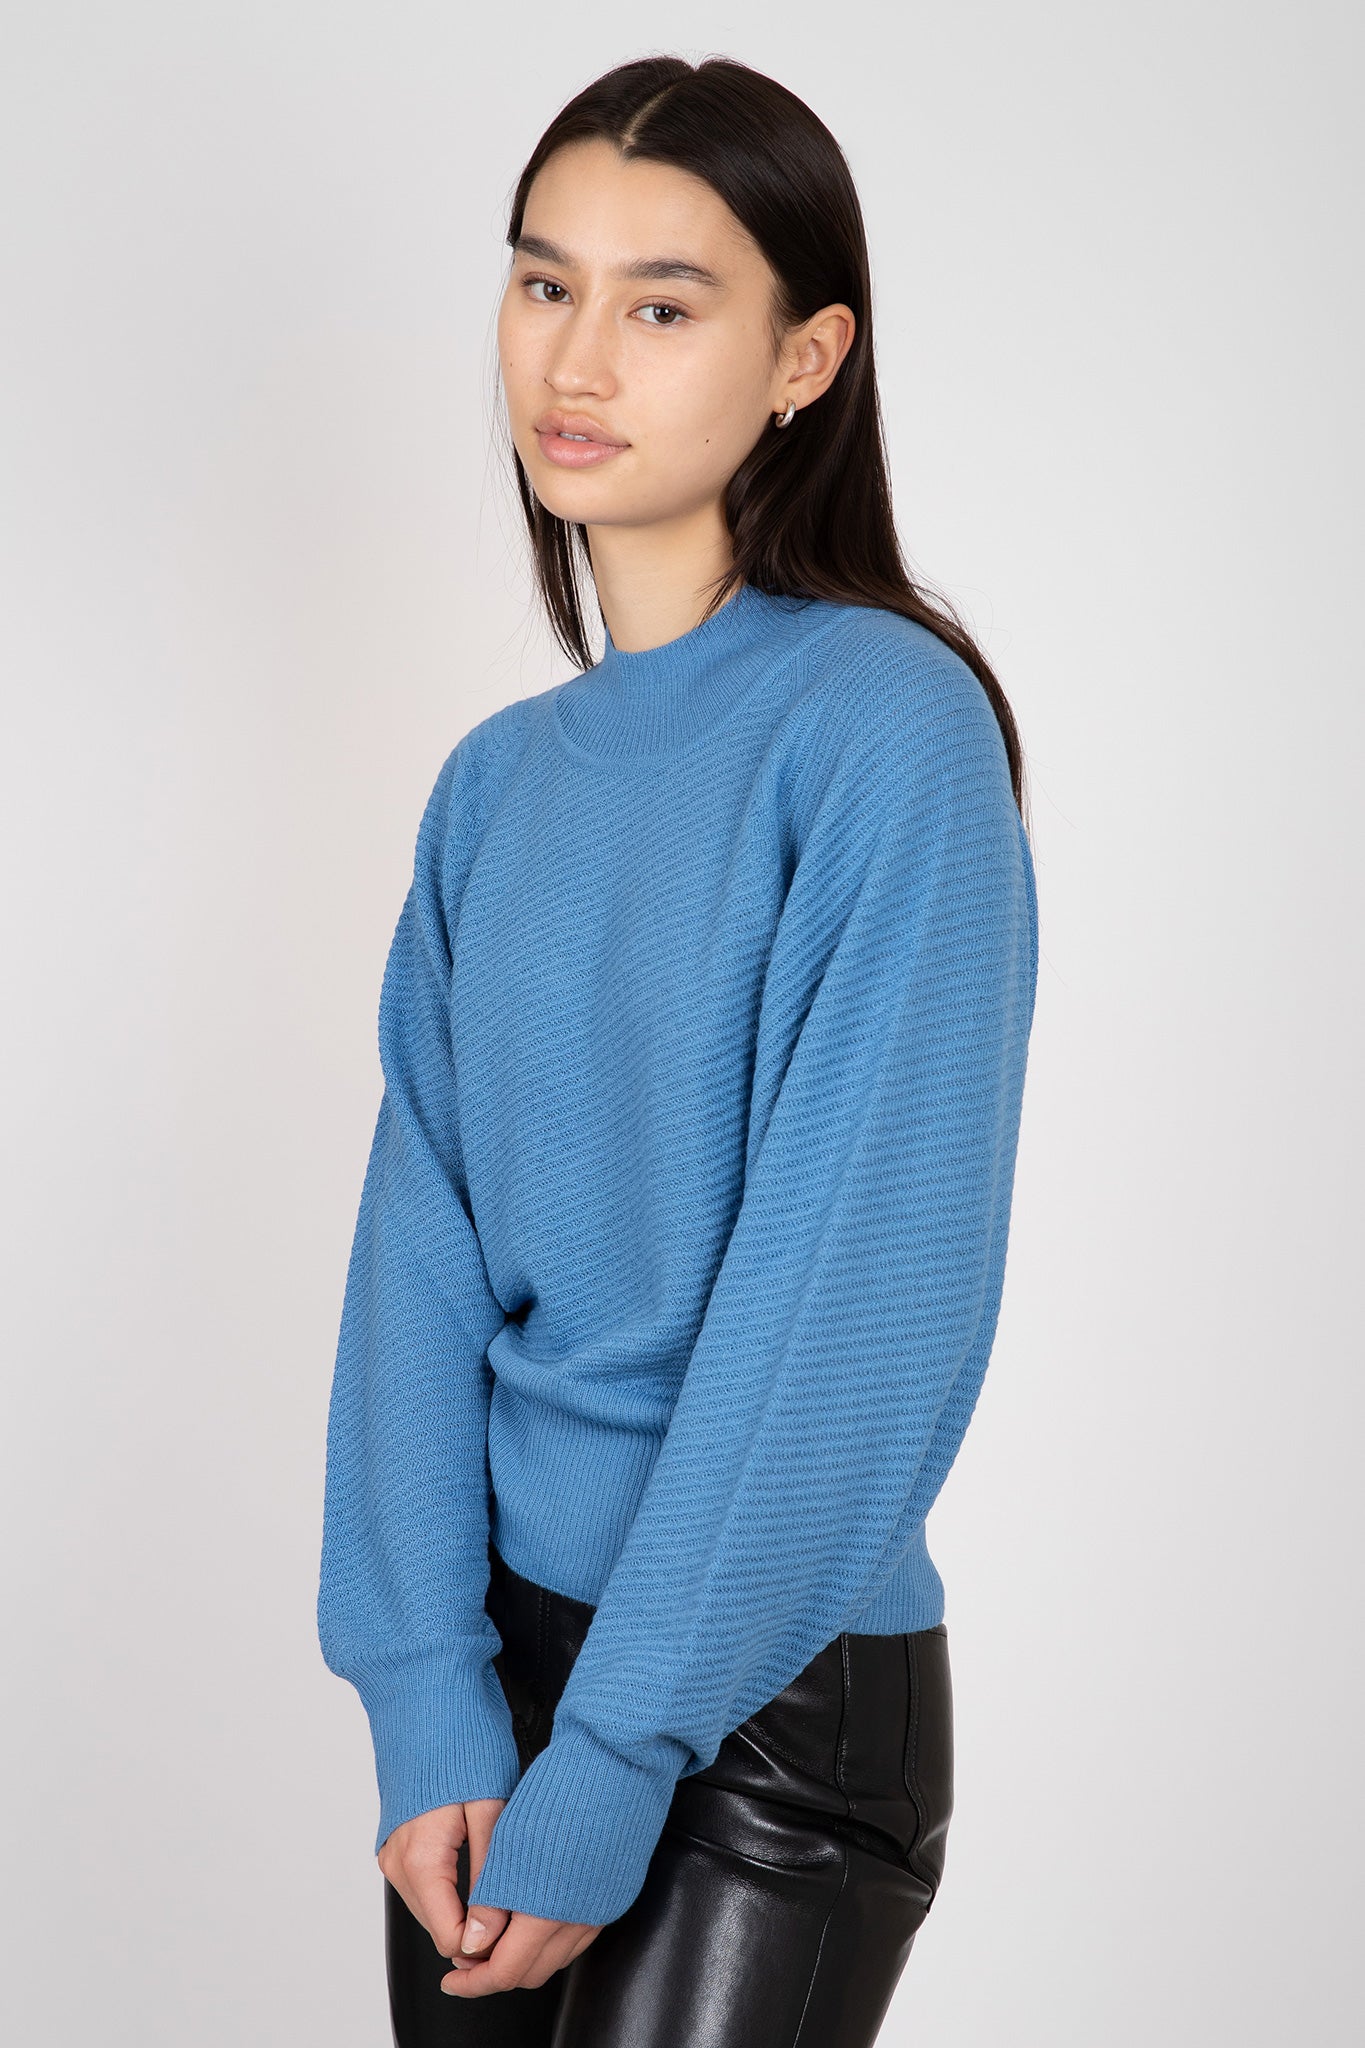 Minito Top Sweaters & Knits Rachel Comey   